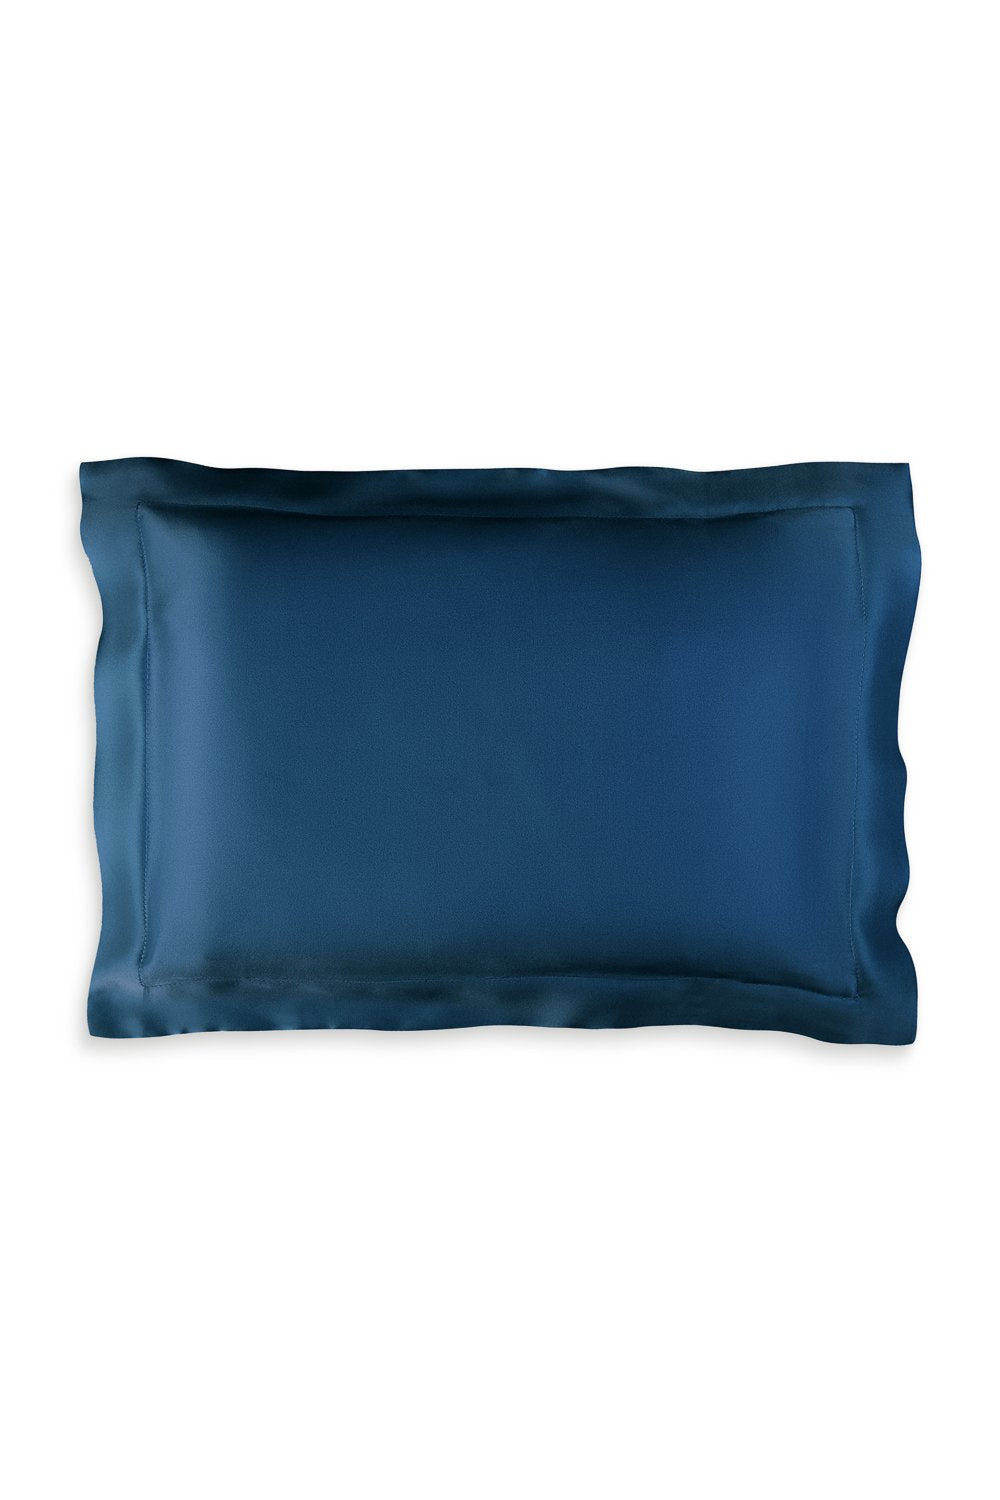 Baby Oxford Silk Pillowcase in Navy Blue